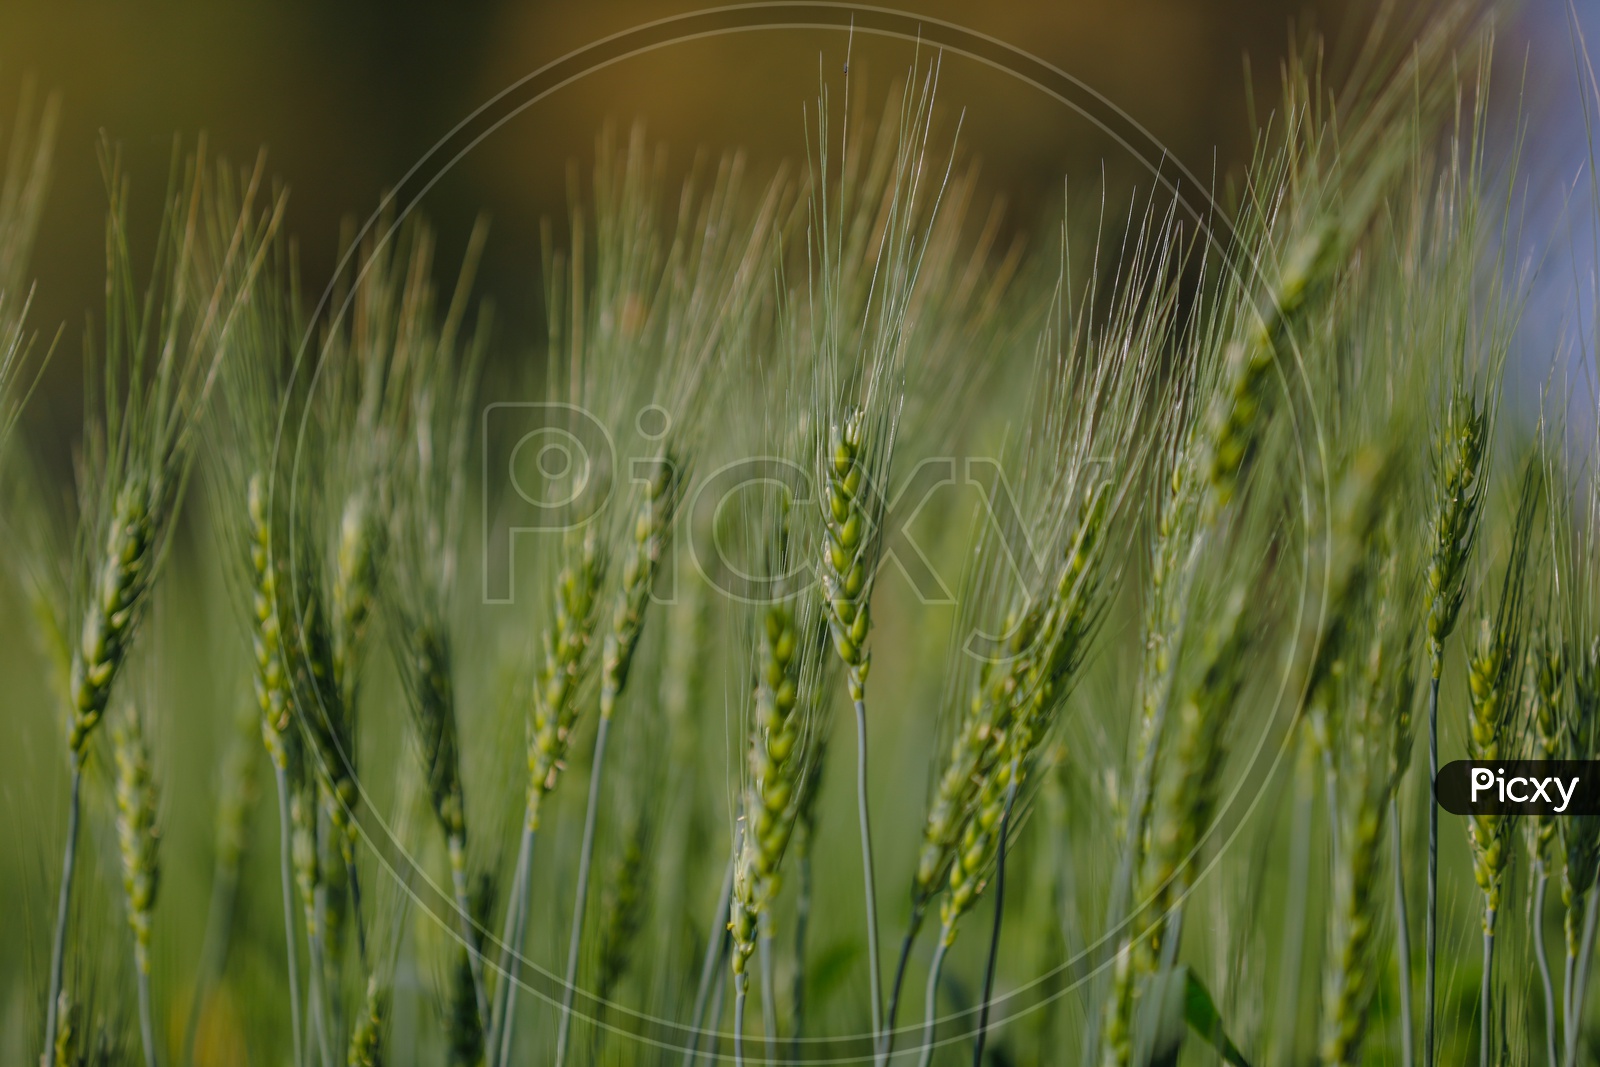 Green Wheat Field in India